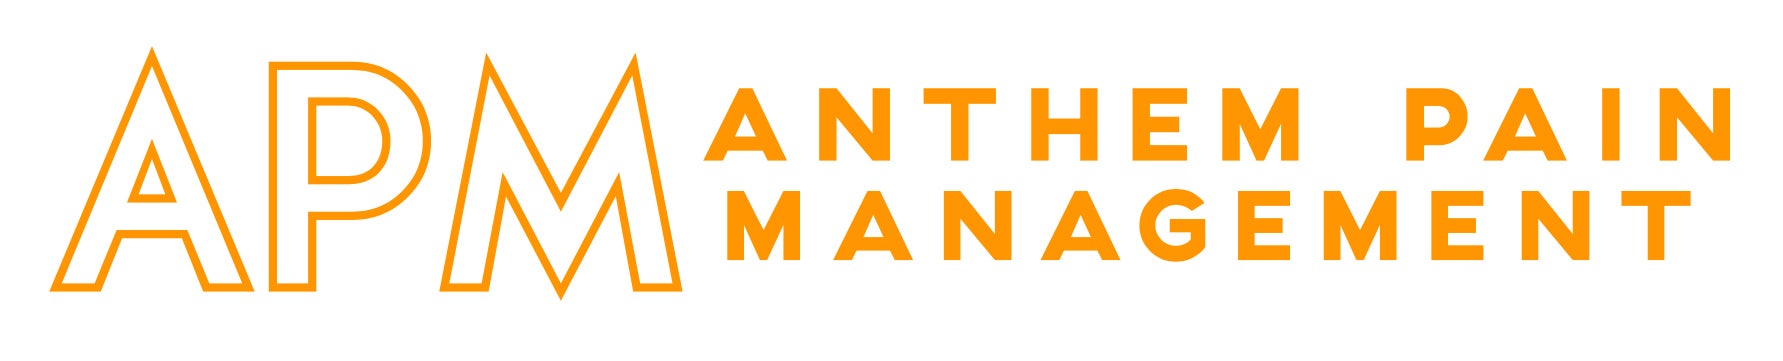 Anthem pain management logo